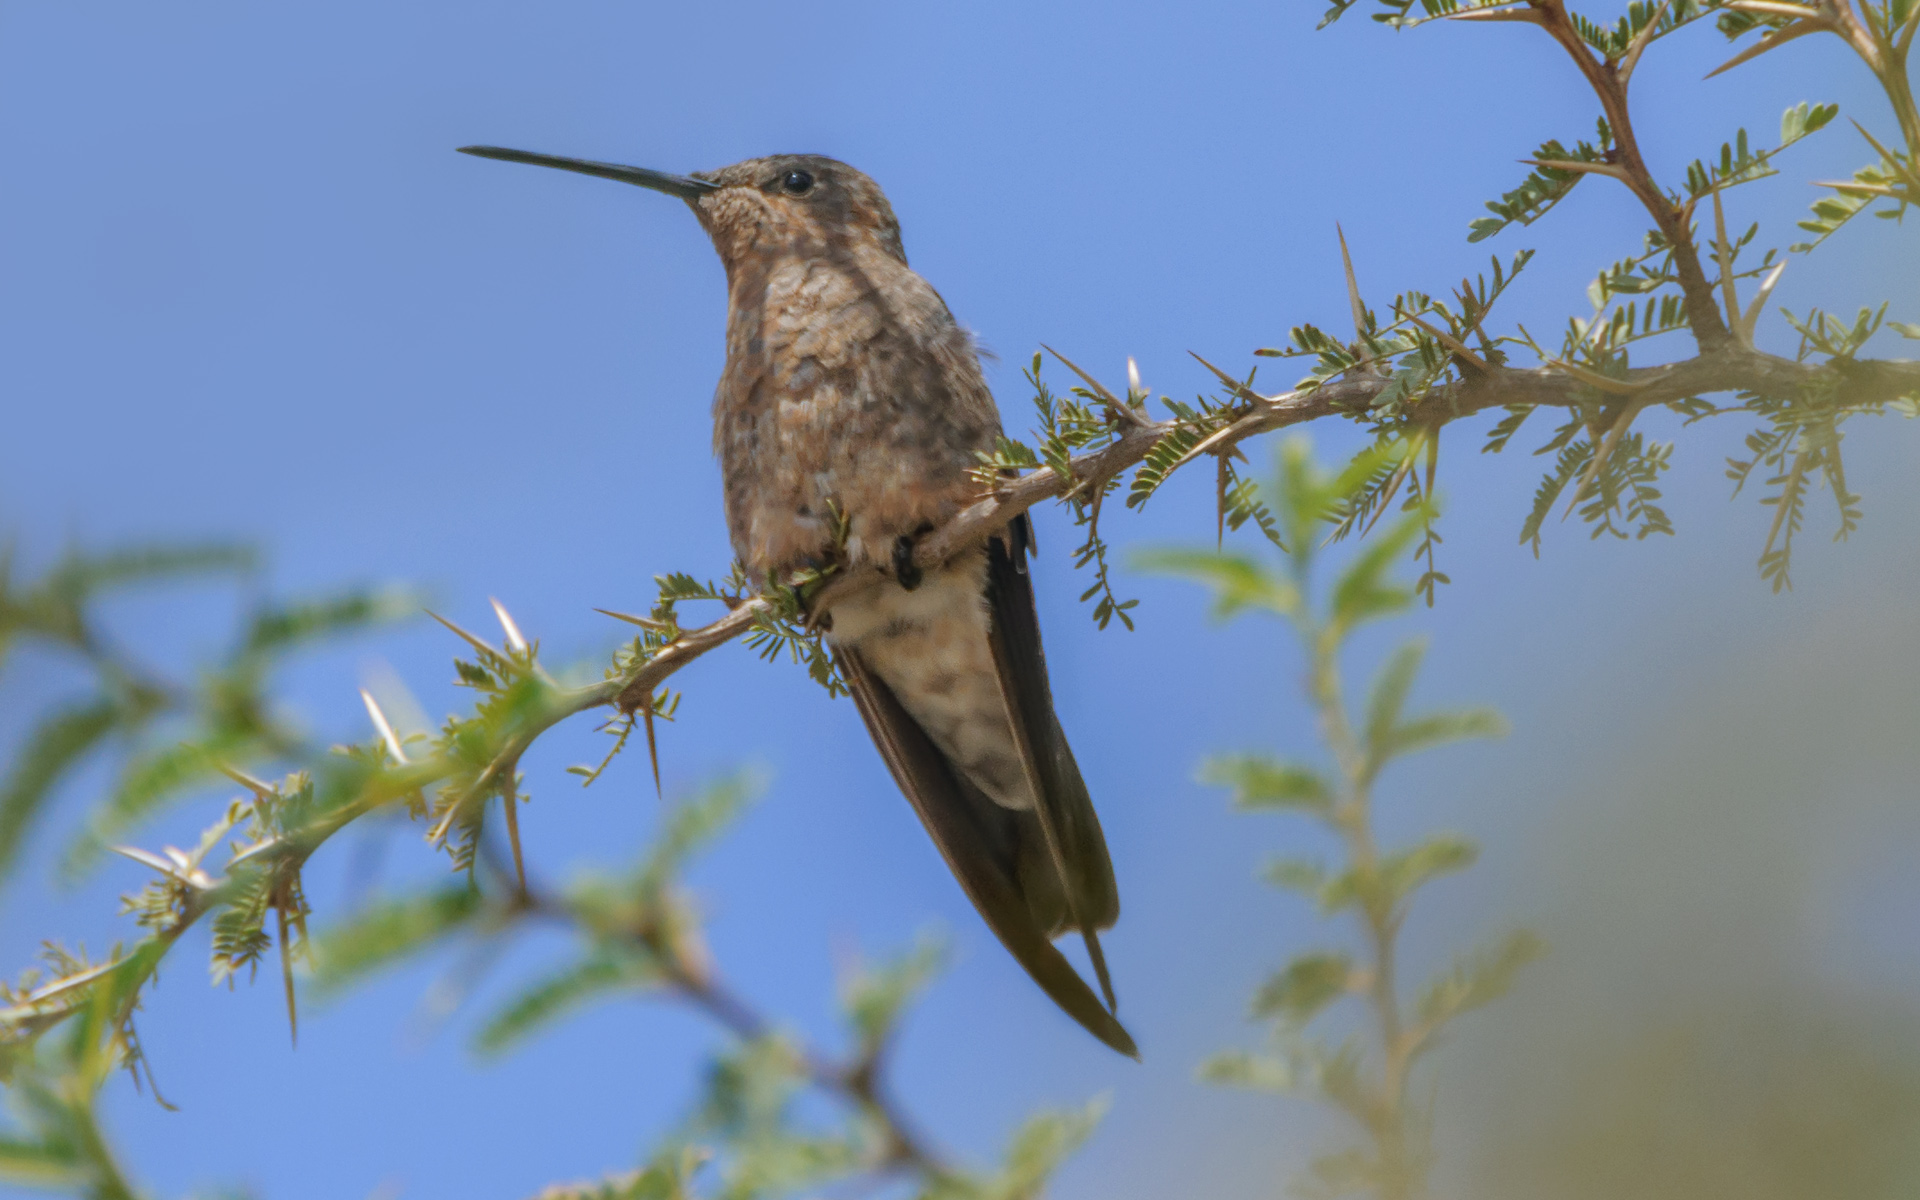 Giant hummingbird (Patagona gigas). Image credit: Mario Giorgetta